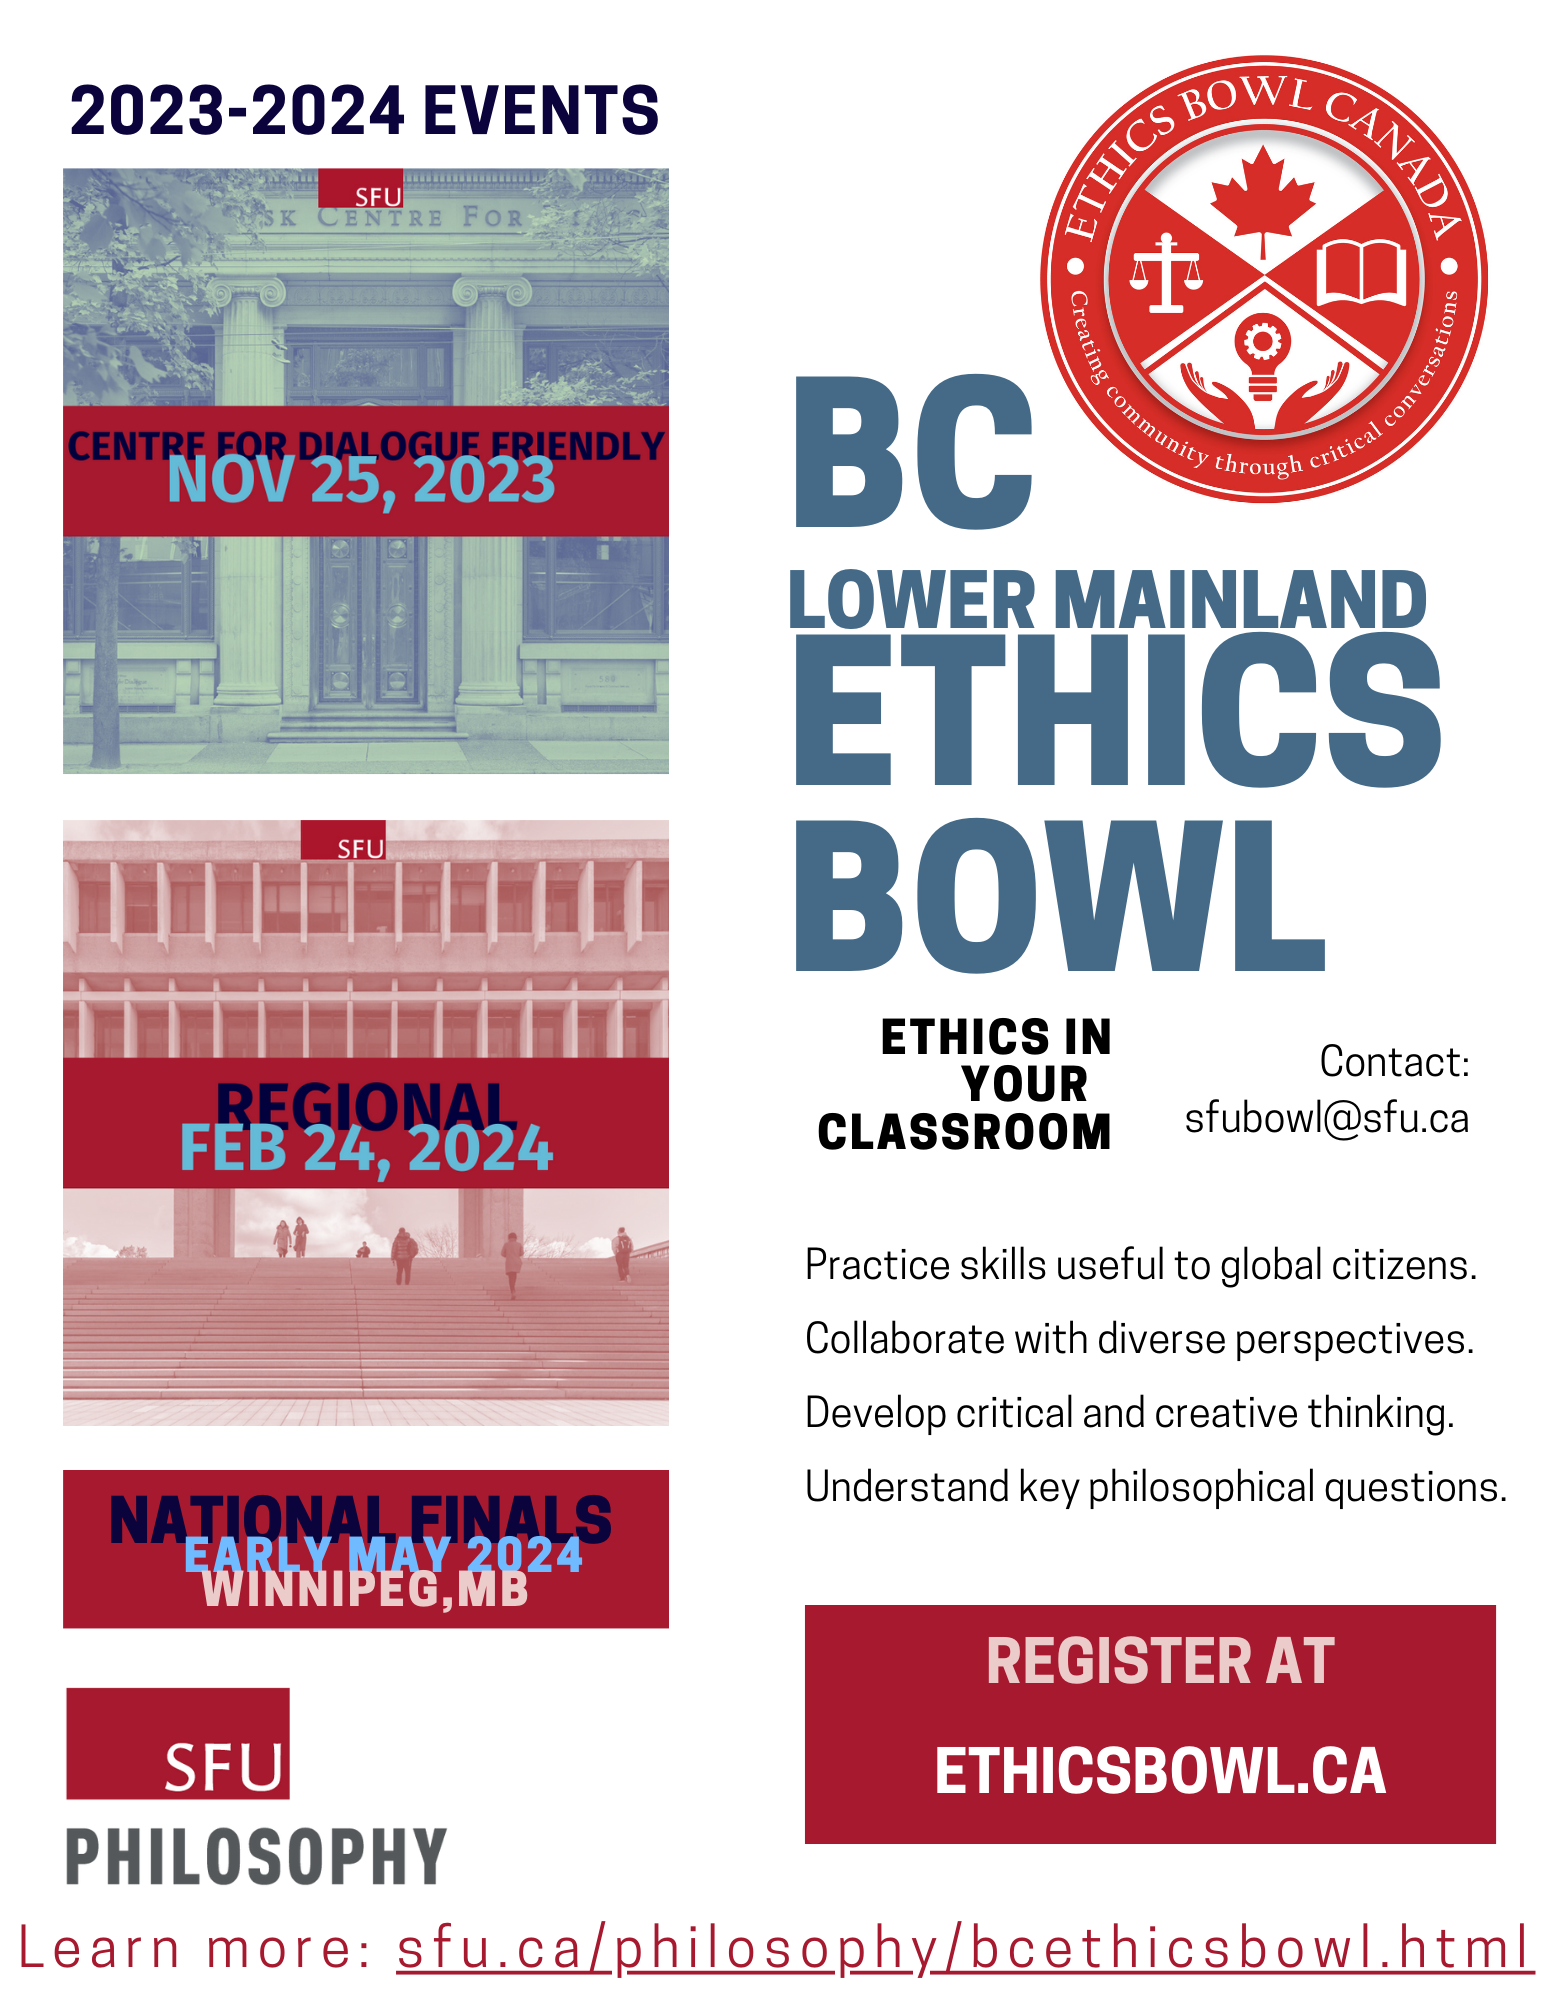 Ethics Bowl Flyer 2023-24 - 1